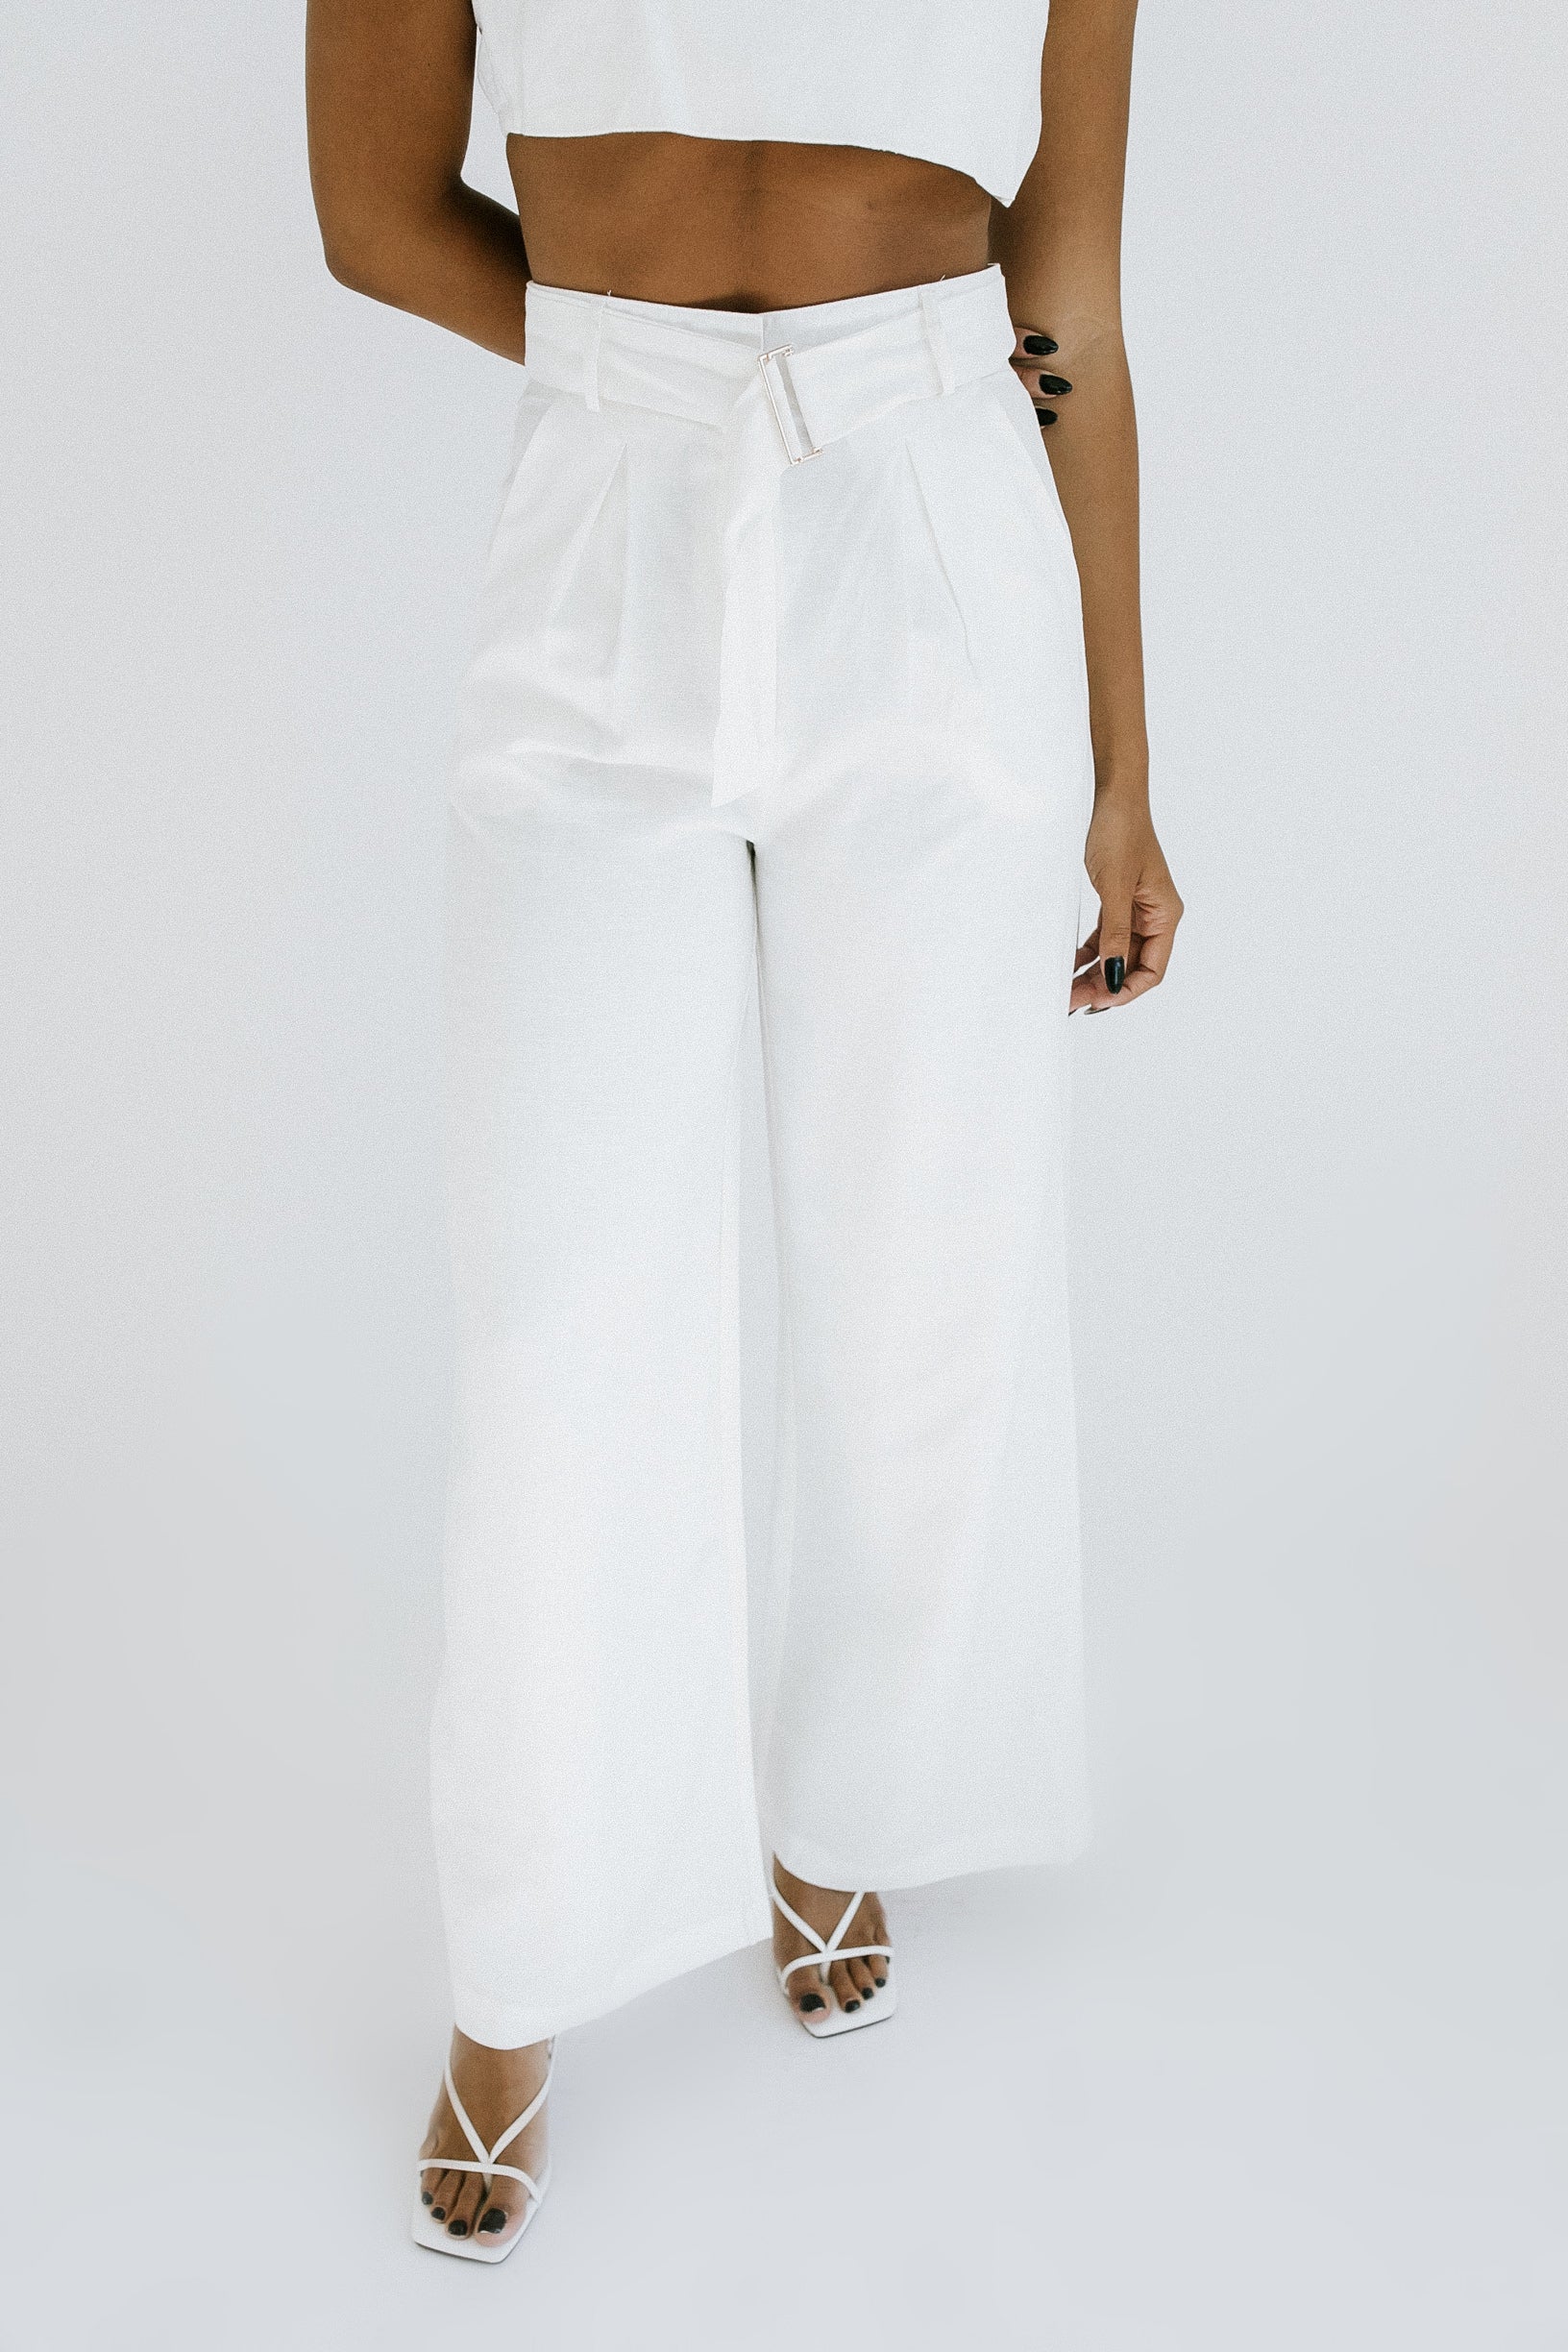 Hales Crop Top + Pant Set - White